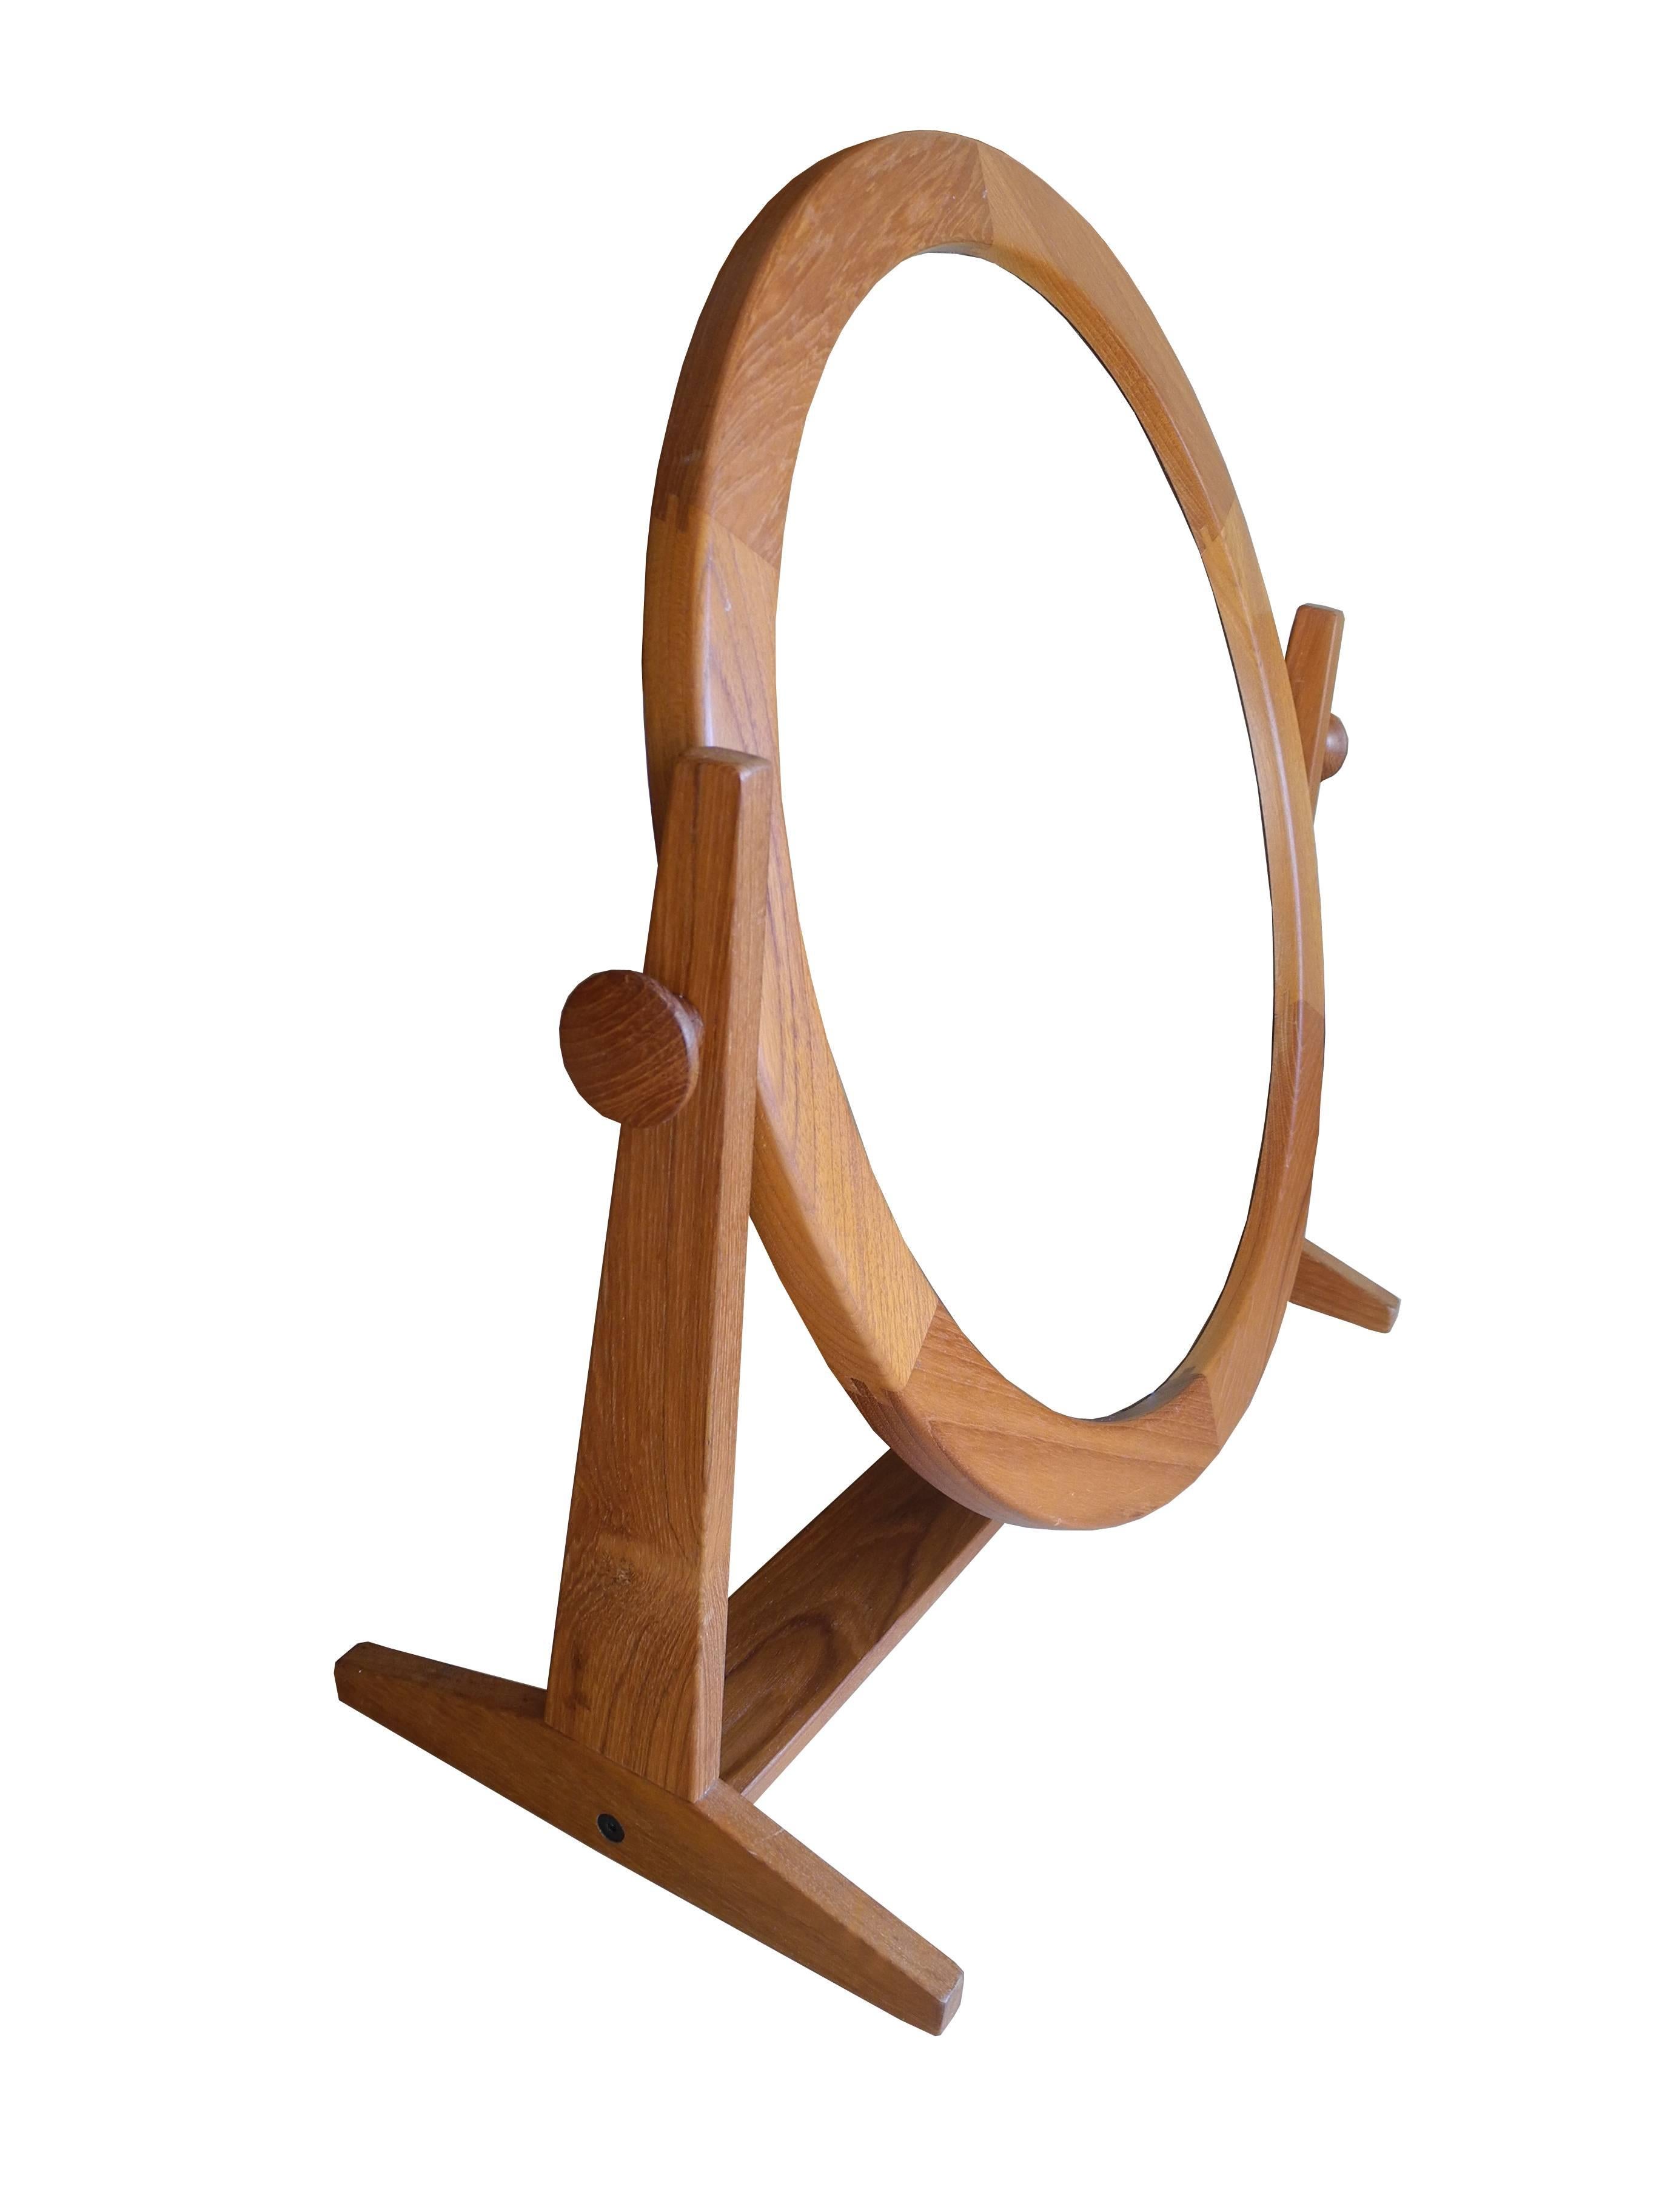 20th Century Danish Modern Tilting Teak Table Mirror by Pedersen & Hansen, 1960s For Sale